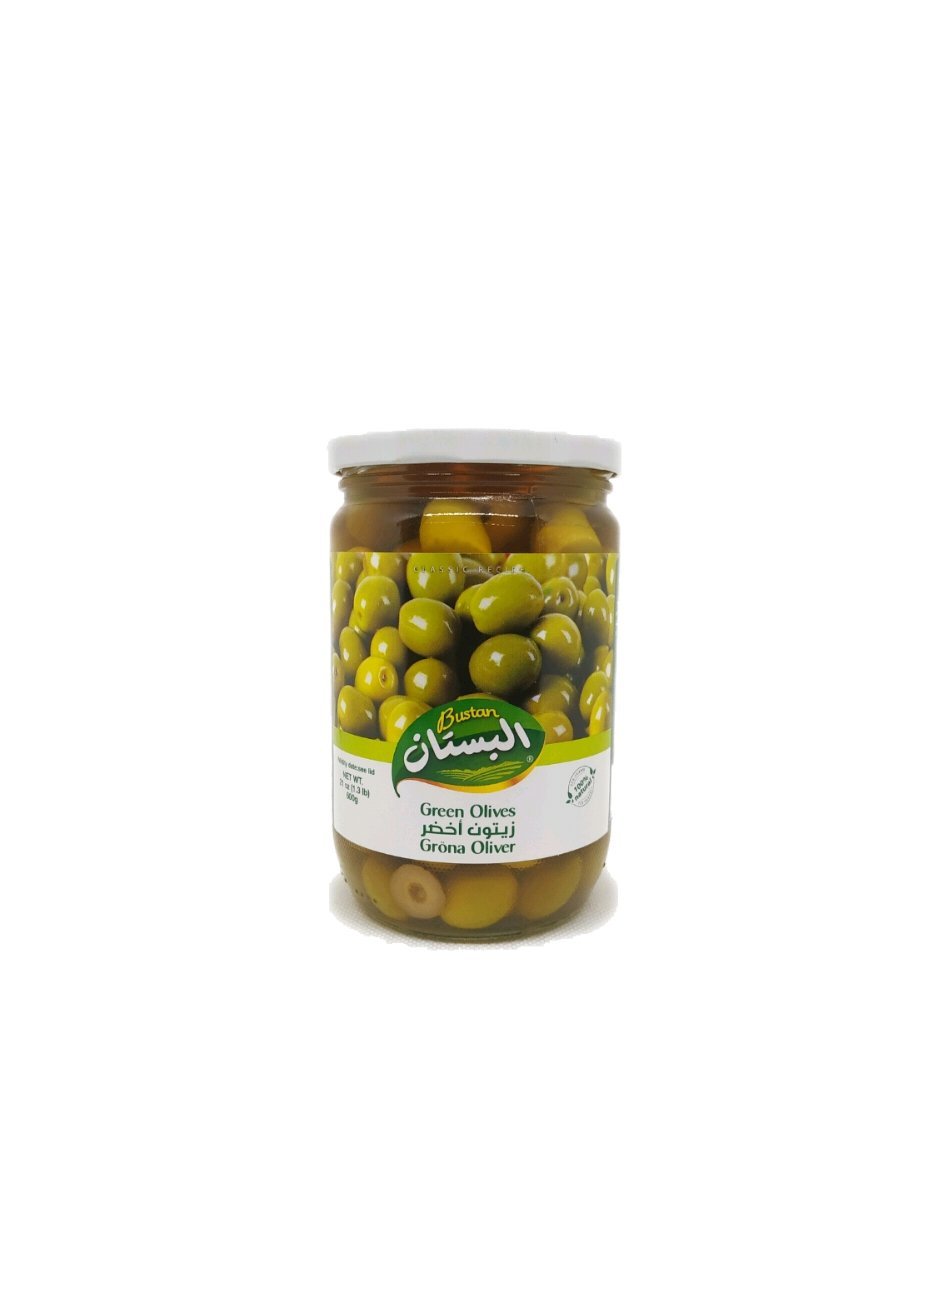 Produits orientaux en ligne : Bustan - olives vertes